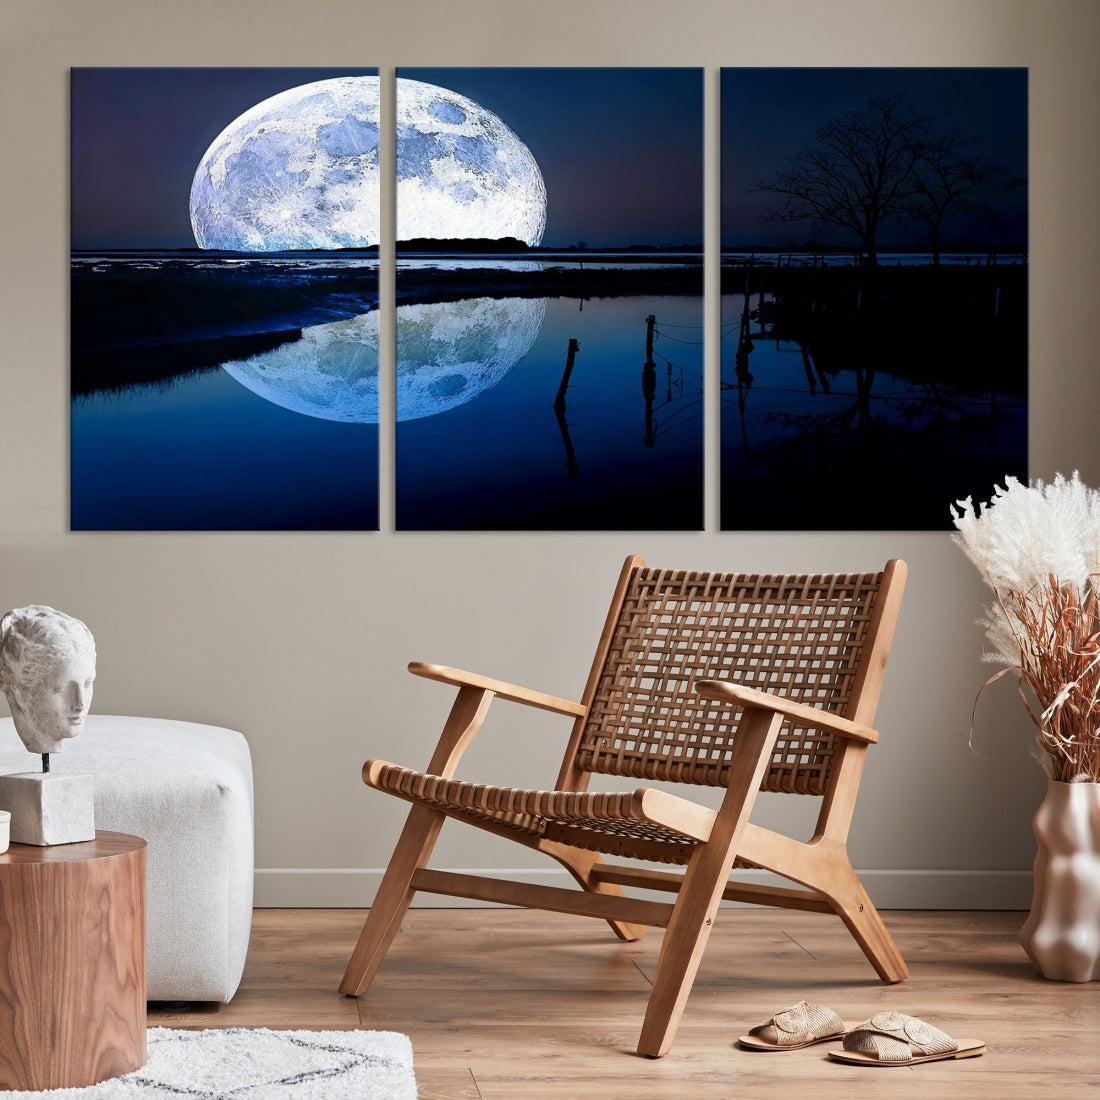 97742 - Blue Moon Large Wall Art Canvas Print